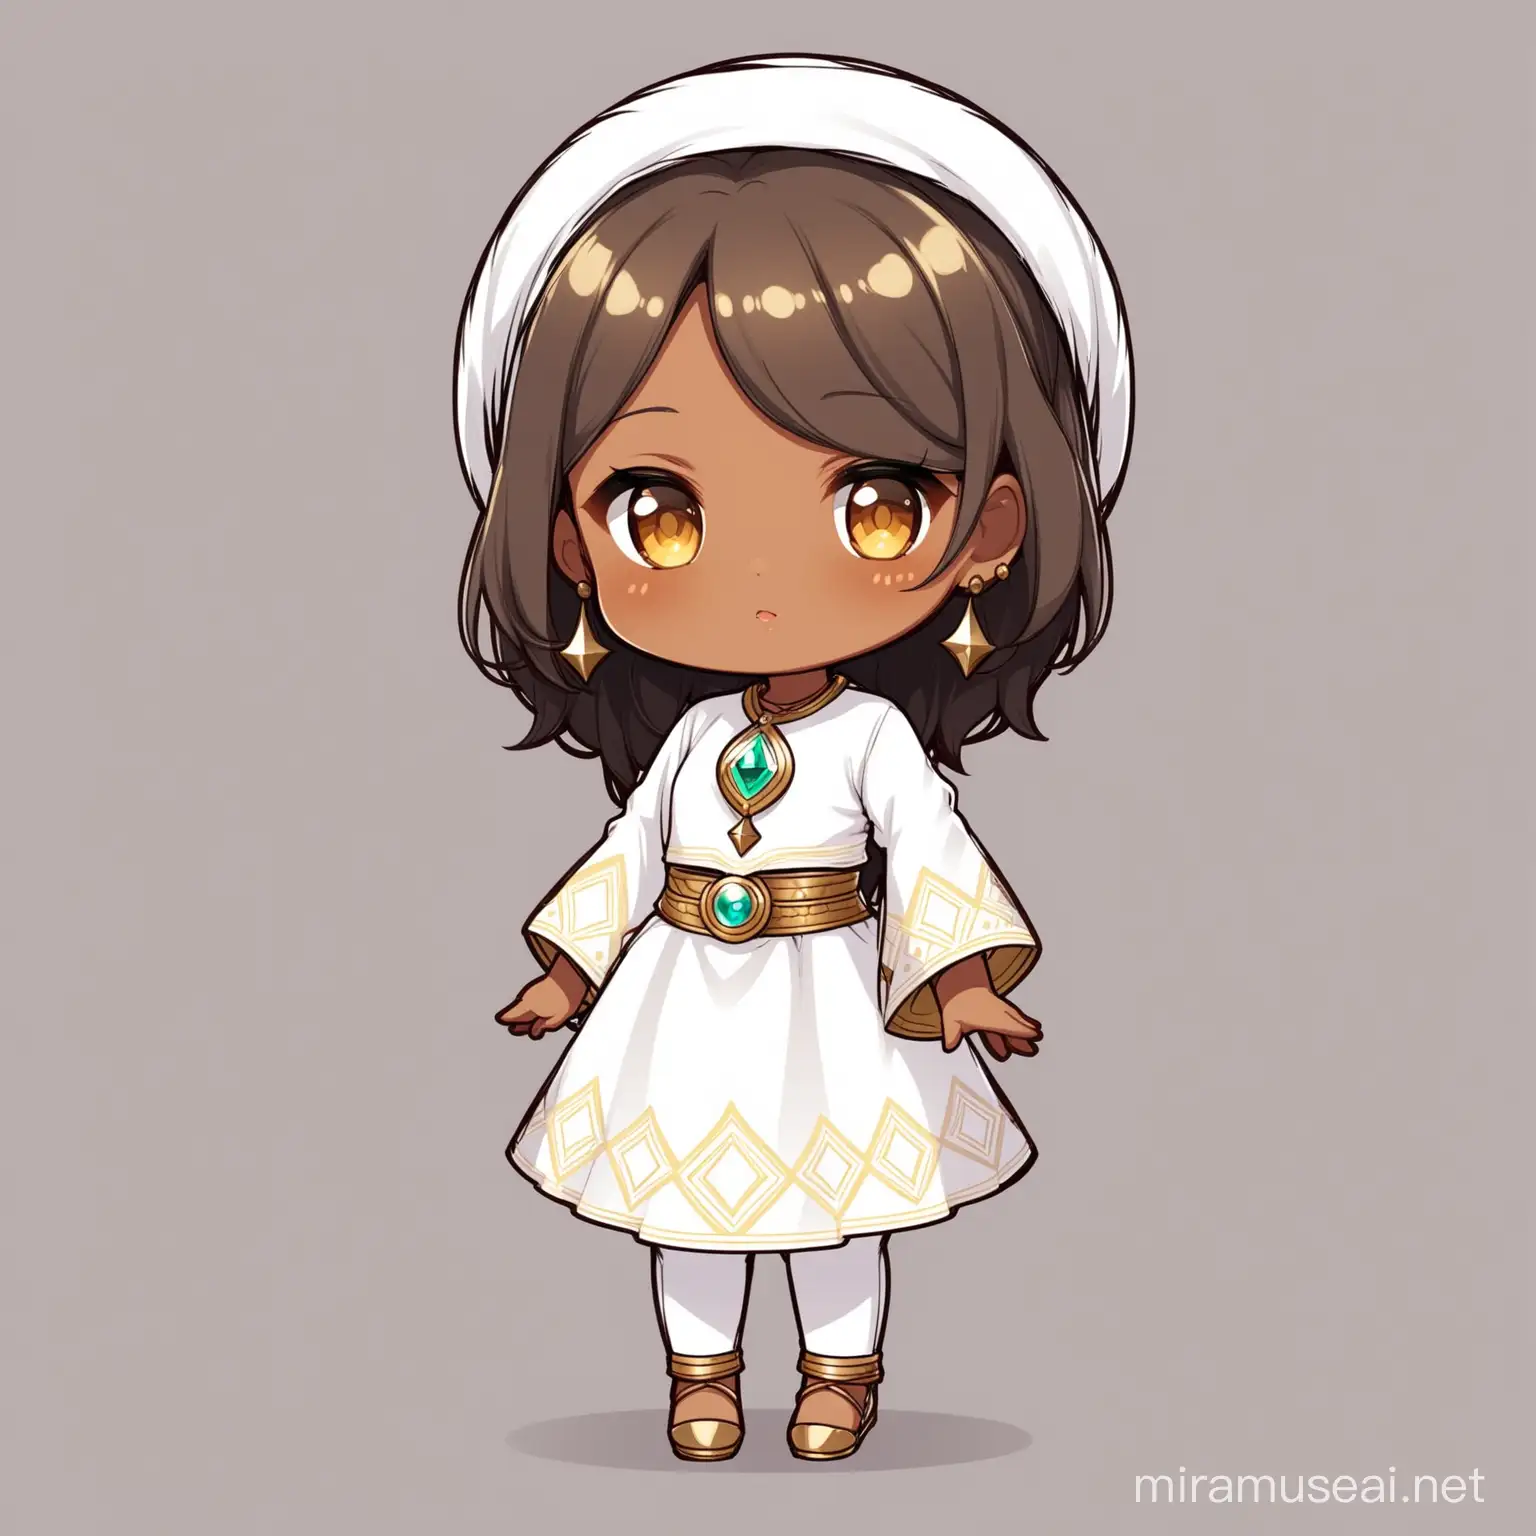 female child magical healer with dark skin wearing white on a white background full body chibi style